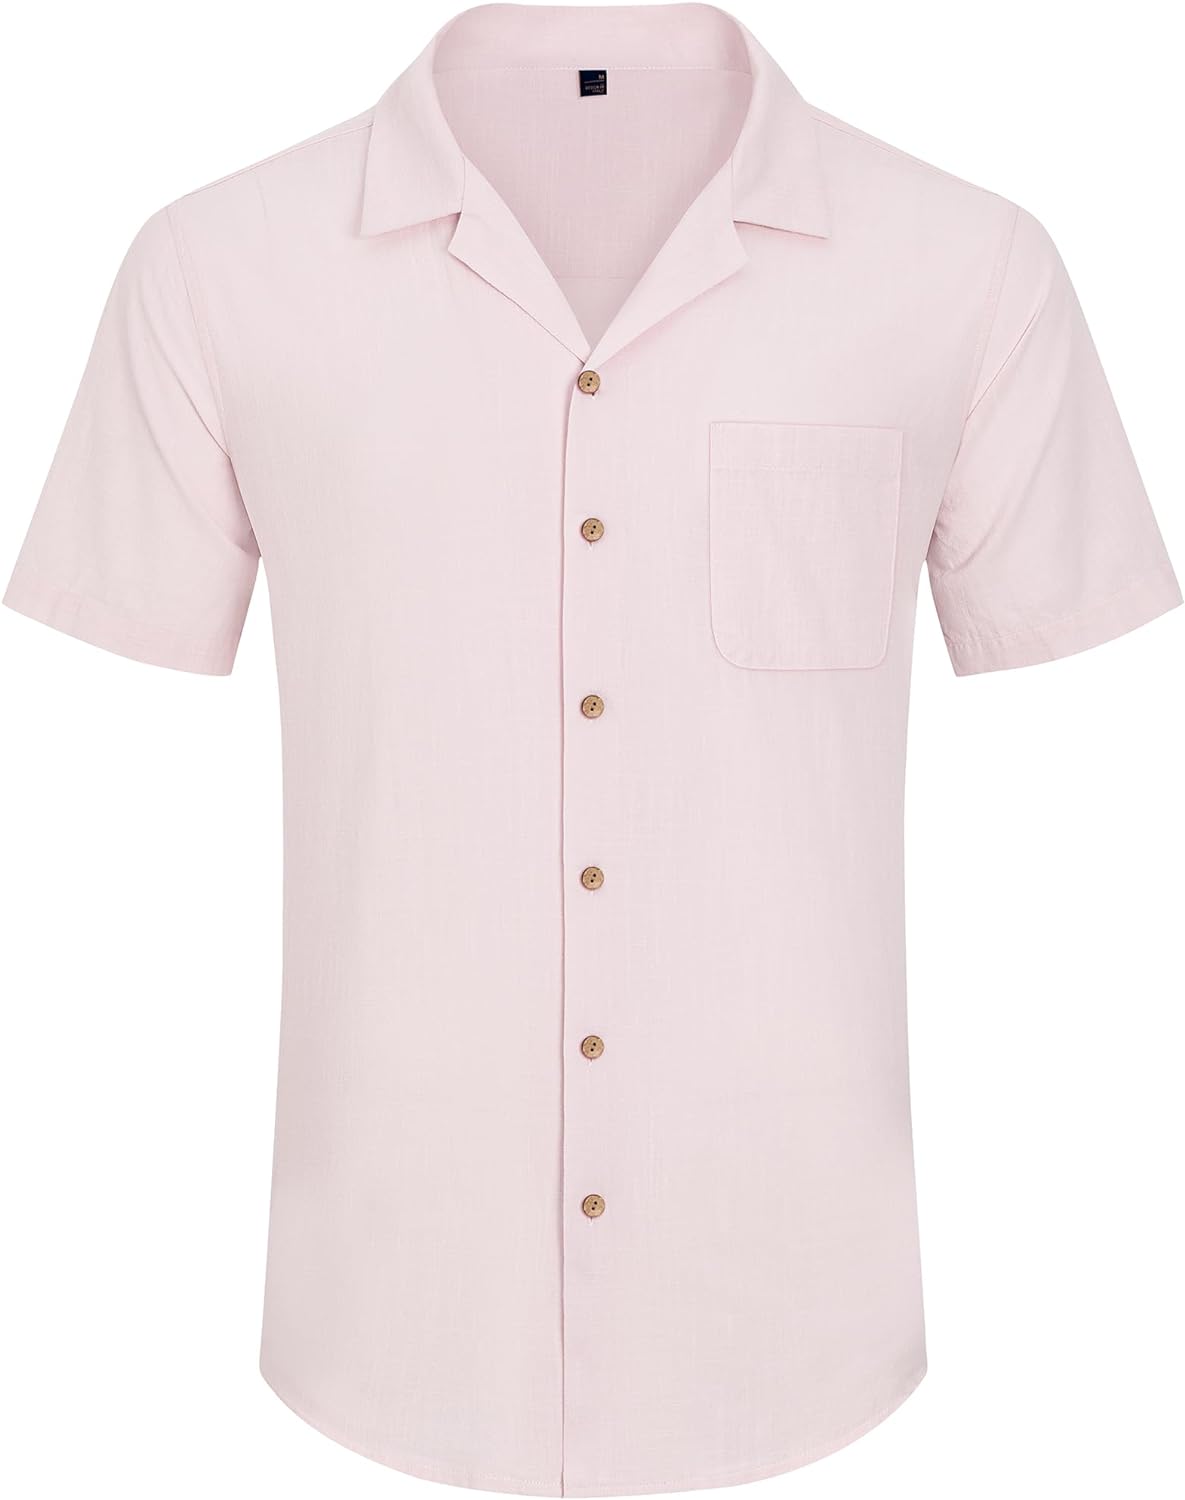 Alimens  Gentle Mens Linen Shirts Short Sleeve Button Down Shirts Casual Summer Beach Tops Cotton Hawaiian Shirts